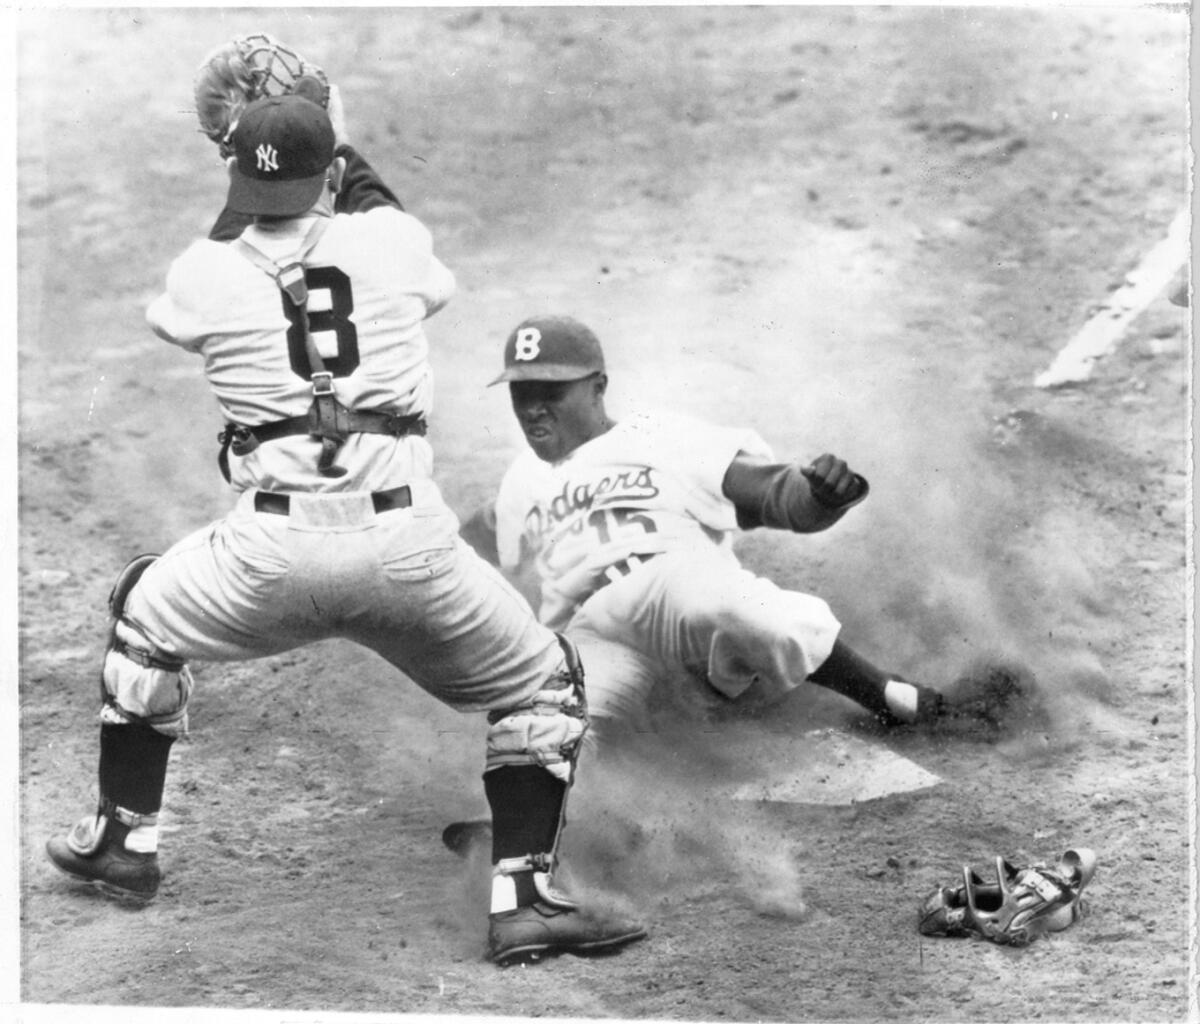 Sandy Amoros sliding into a waiting Yogi Berra to score in the 1955 World Series.